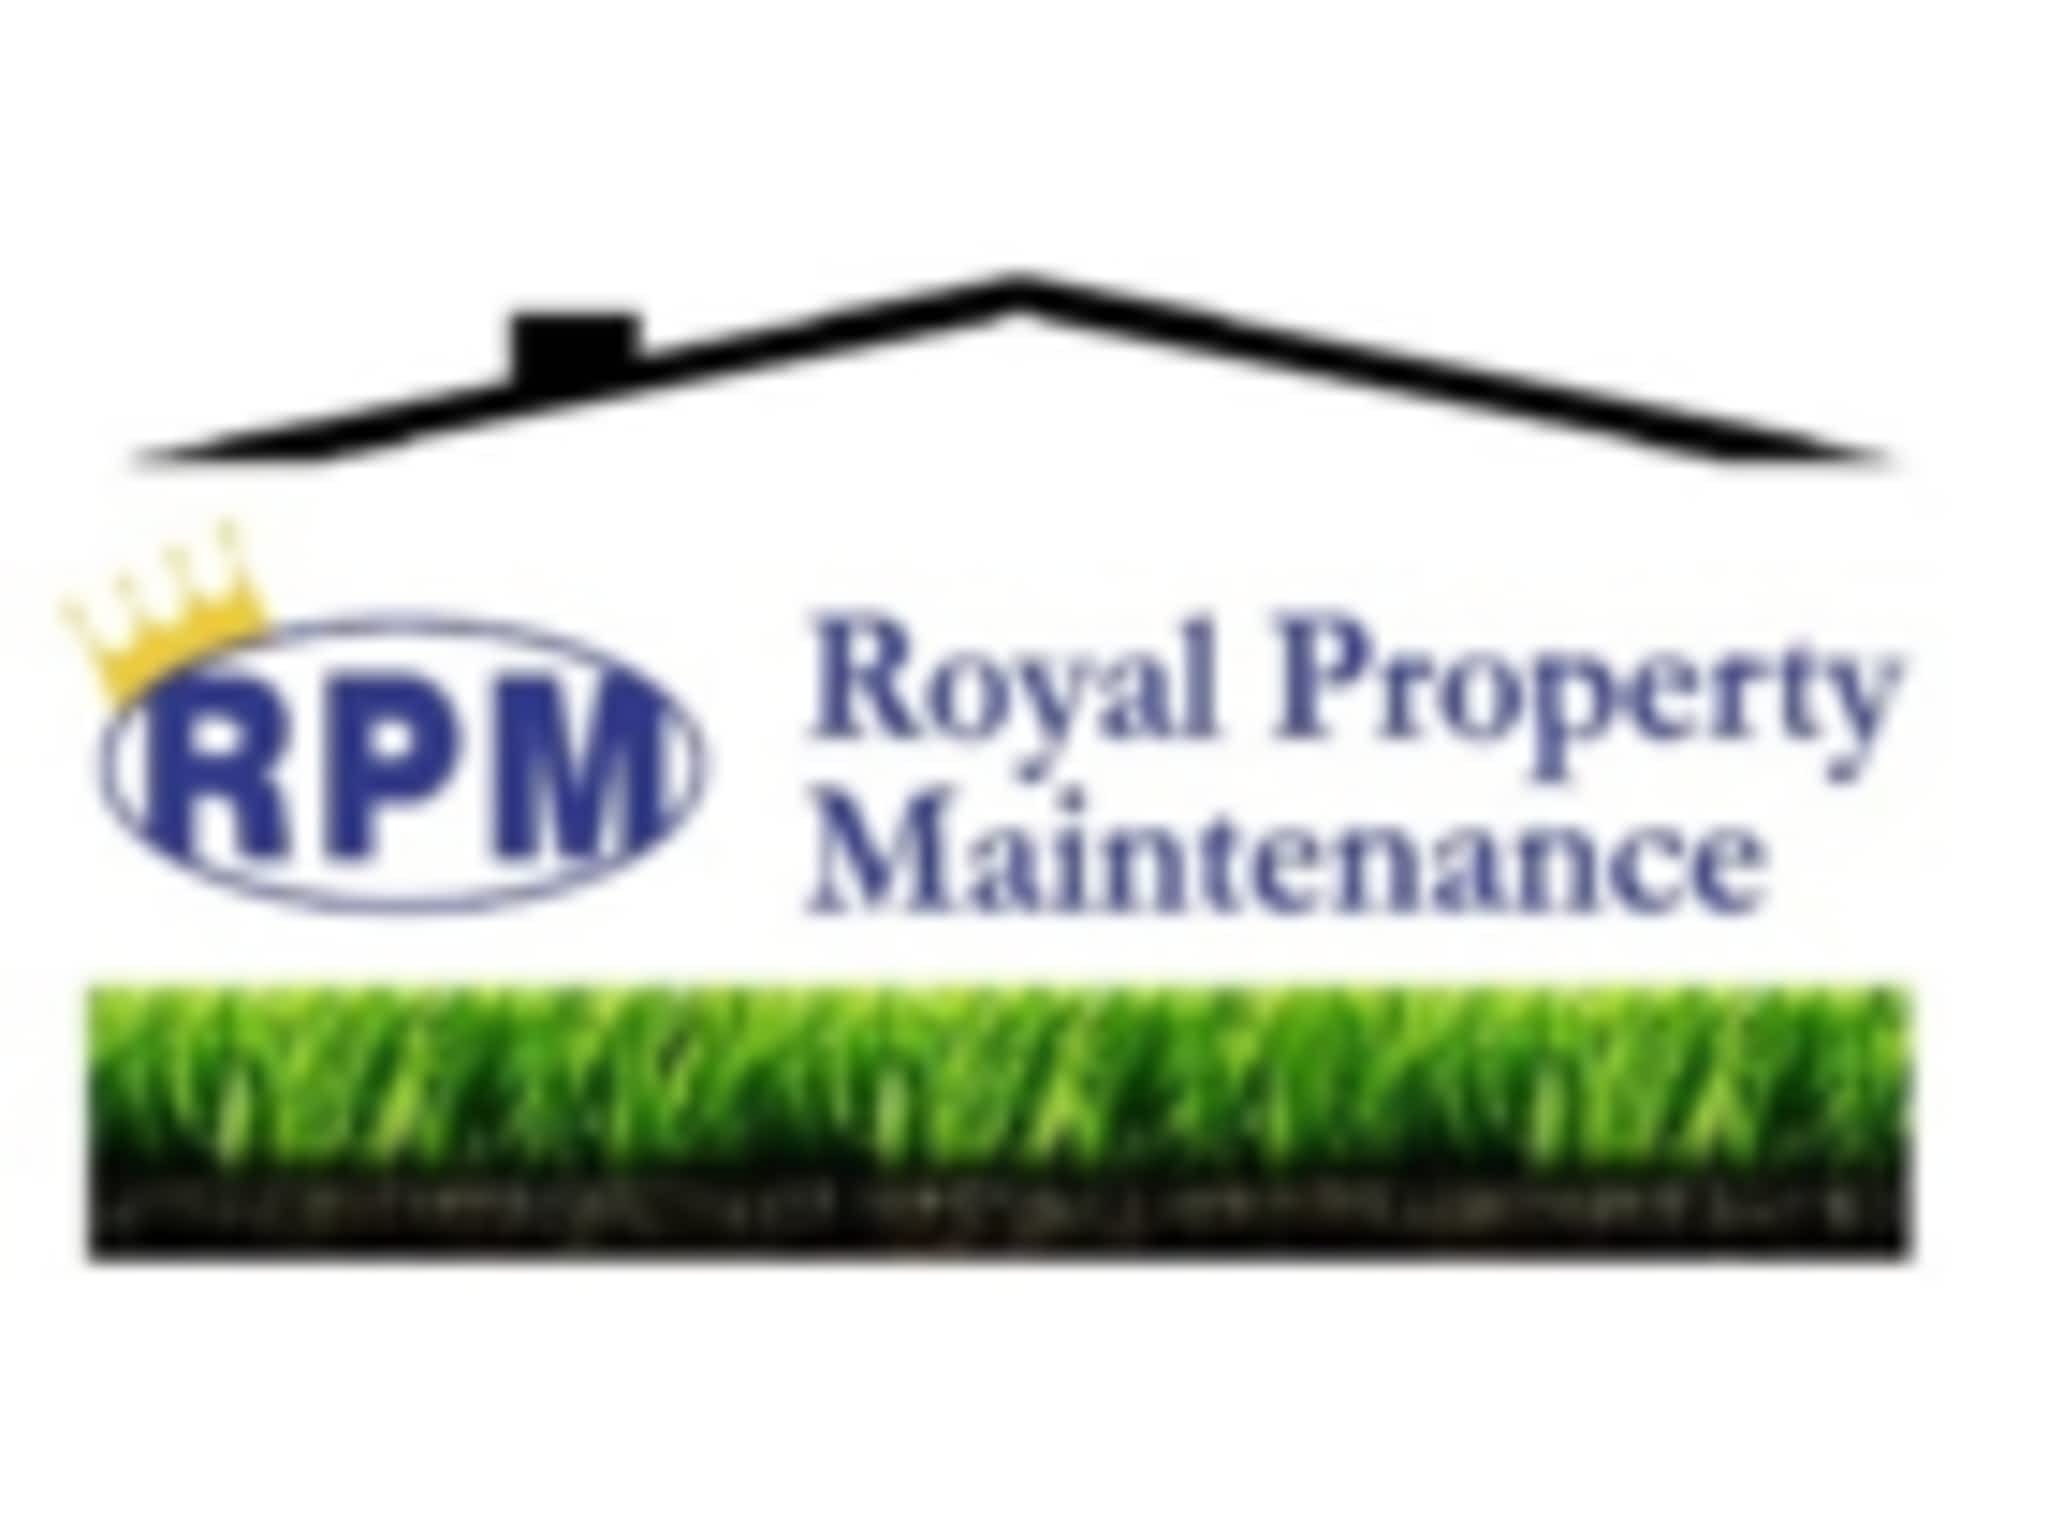 photo RPM Royal Property Maintenance